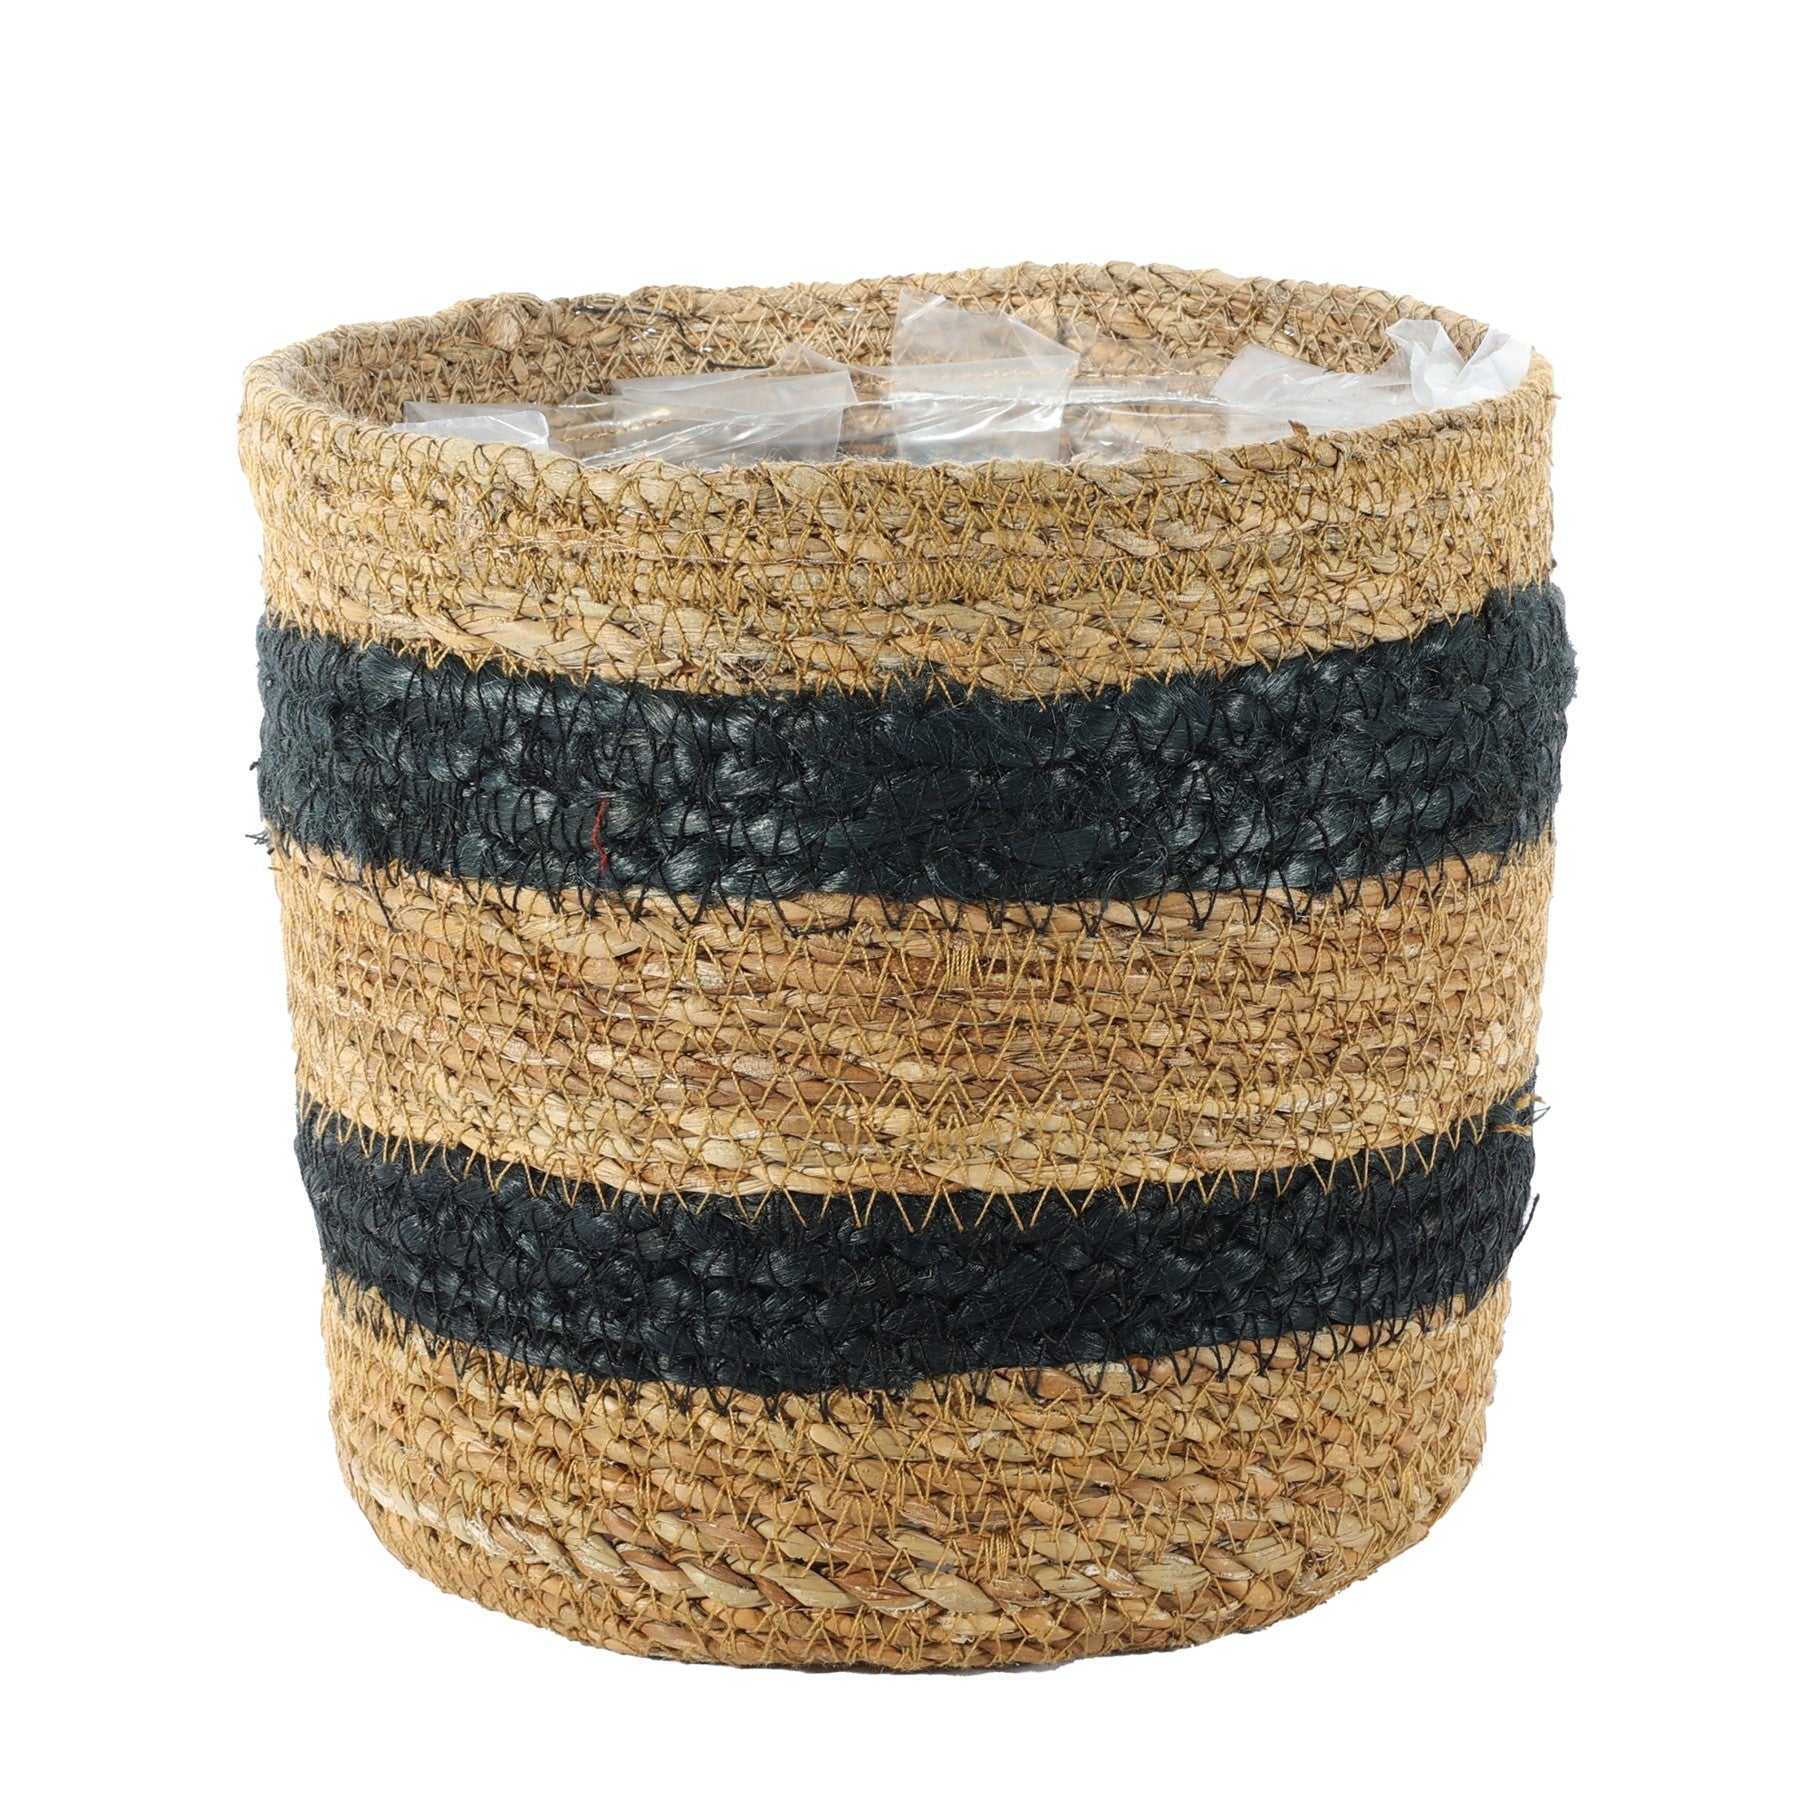 View Natural Black Striped Seagrass Basket 18cm x 18cm information